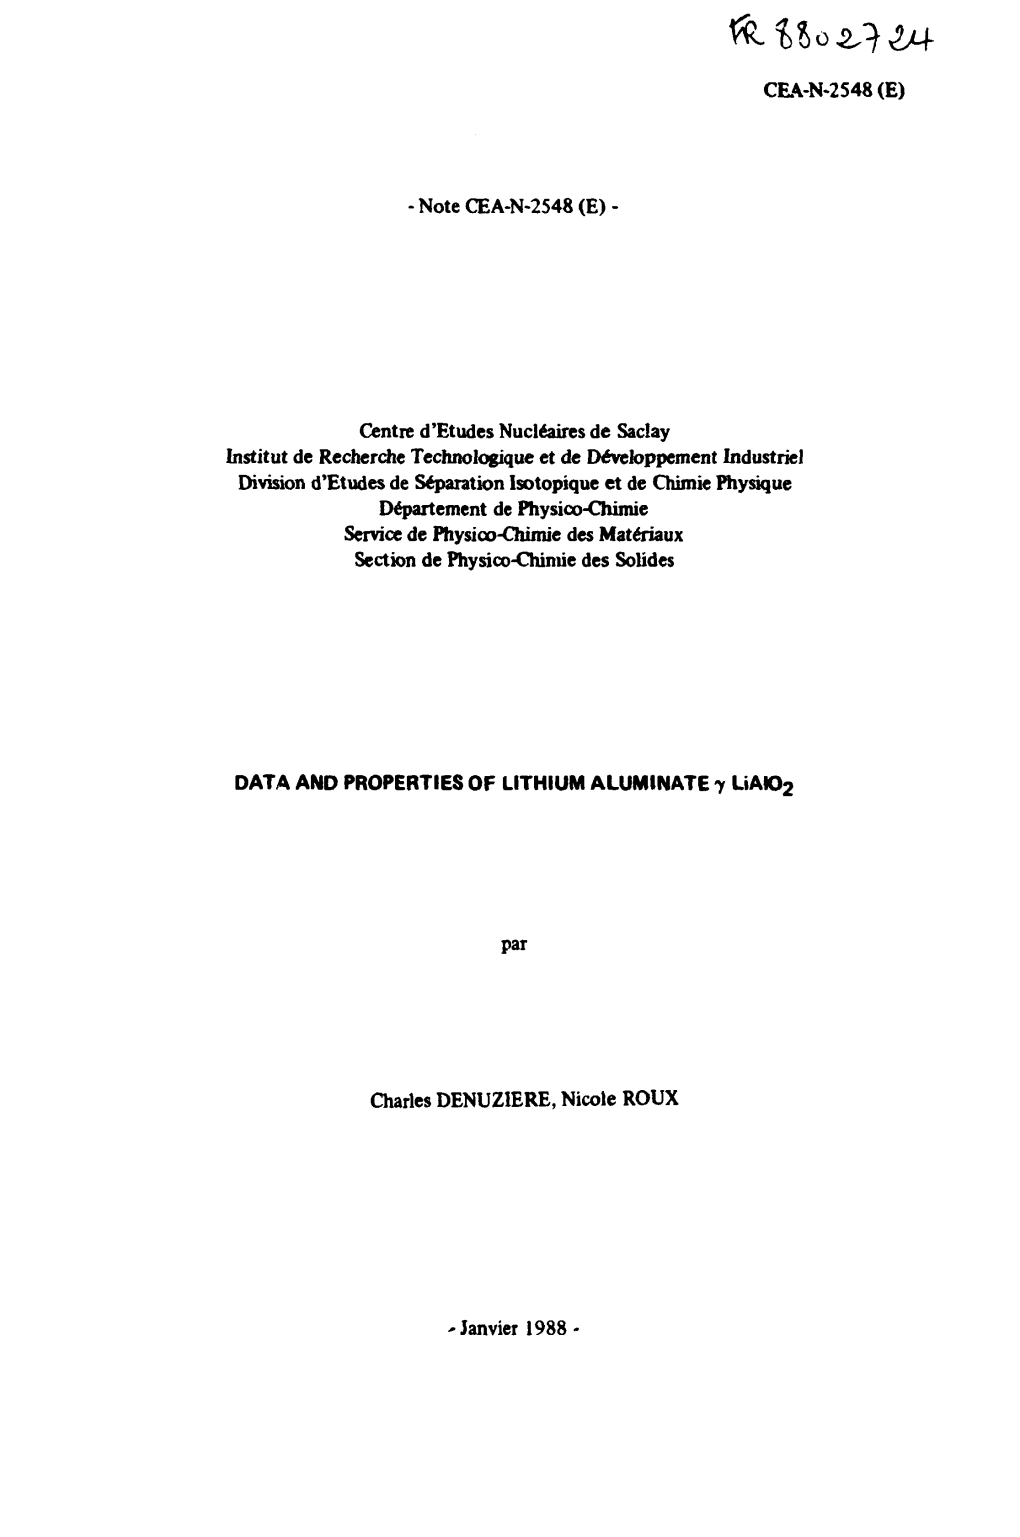 Data and Properties of Lithium Aluminate Γ Lialo 2